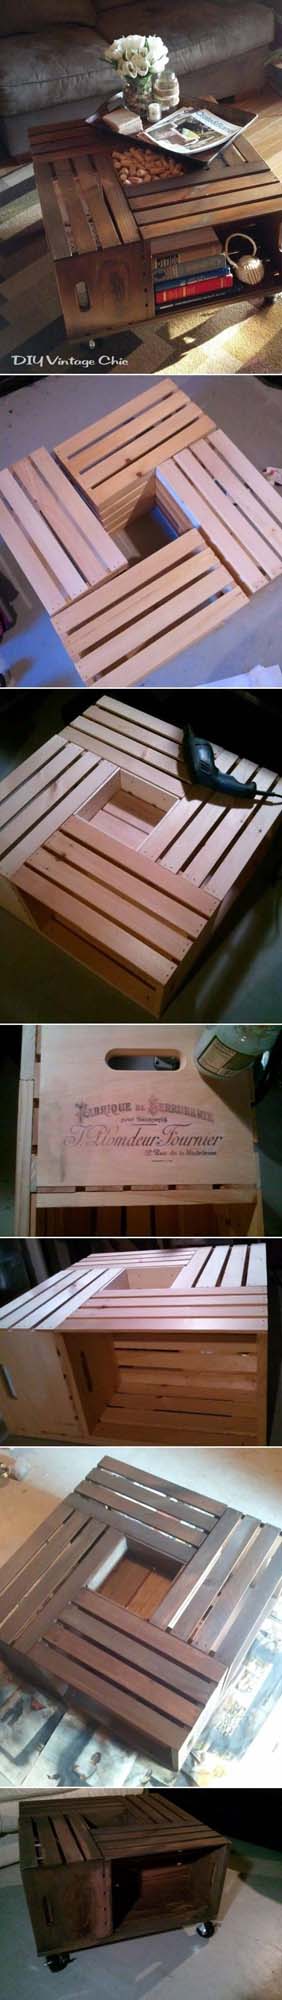 Vintage Wood Crate Coffee Table #rustic #storage #organization #decorhomeideas